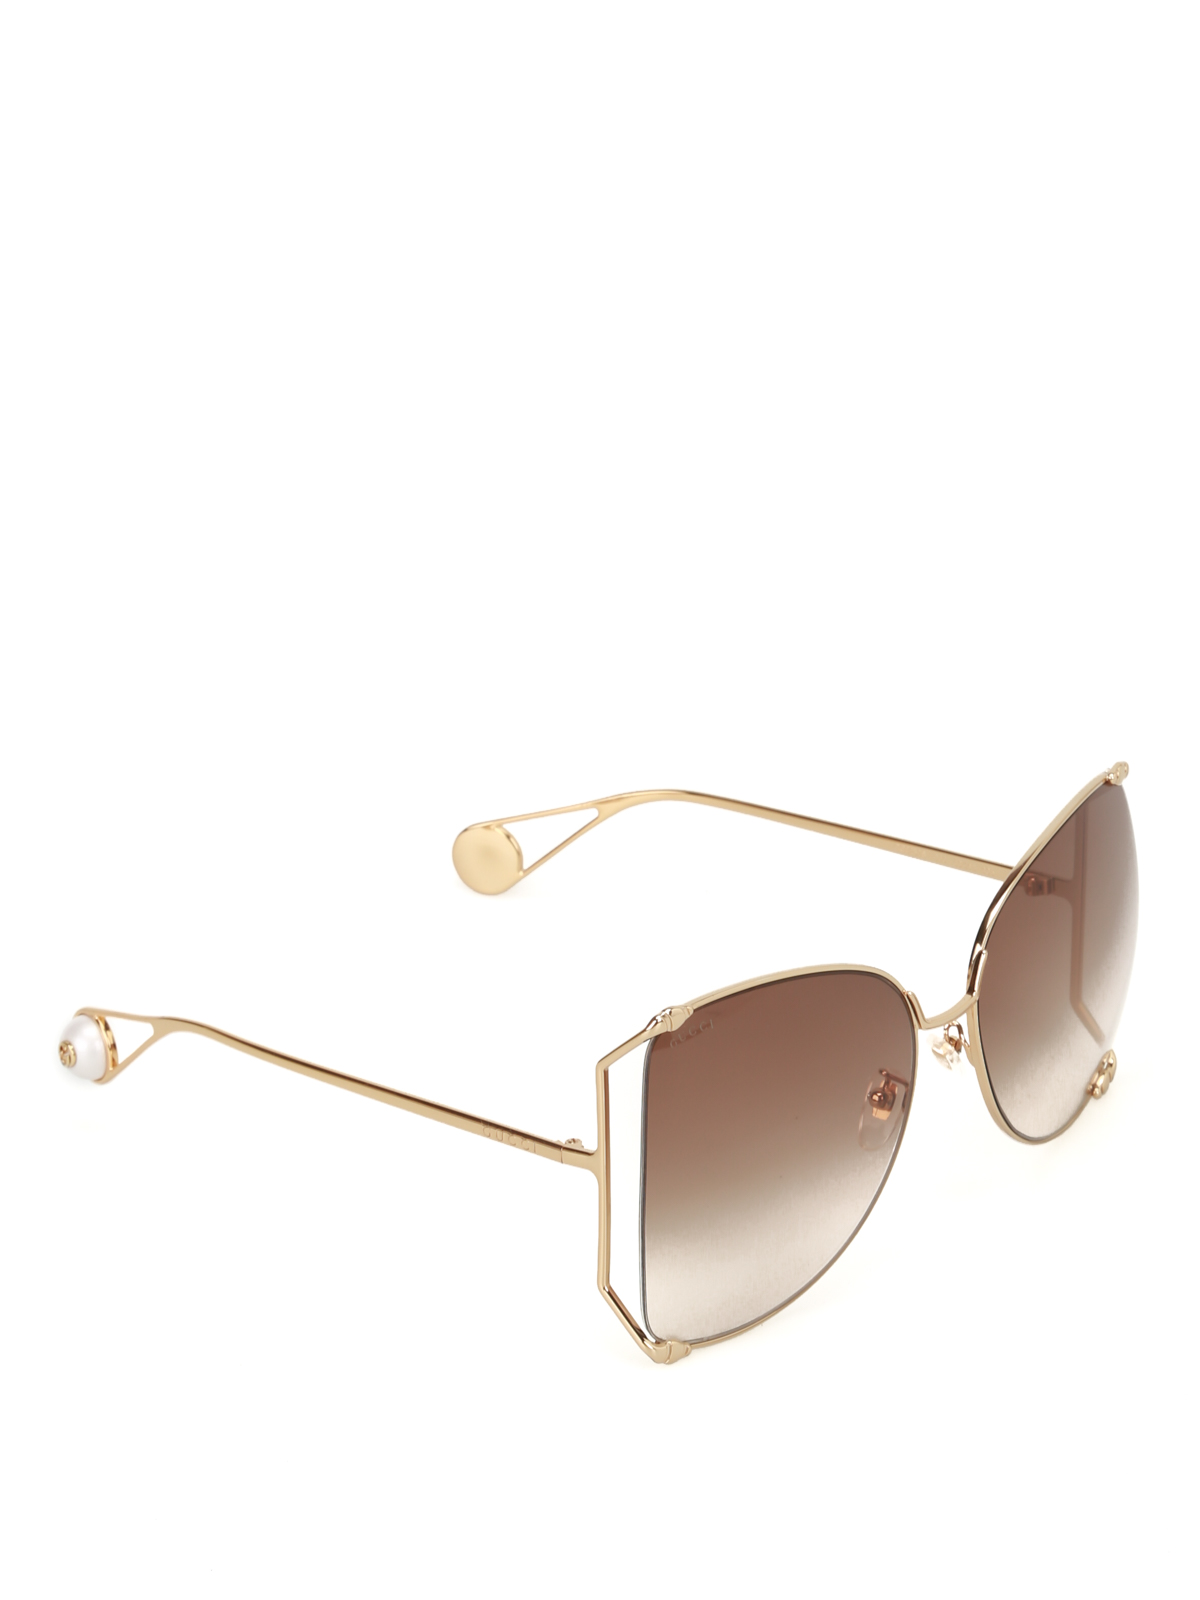 Golden metal oversized sunglasses 